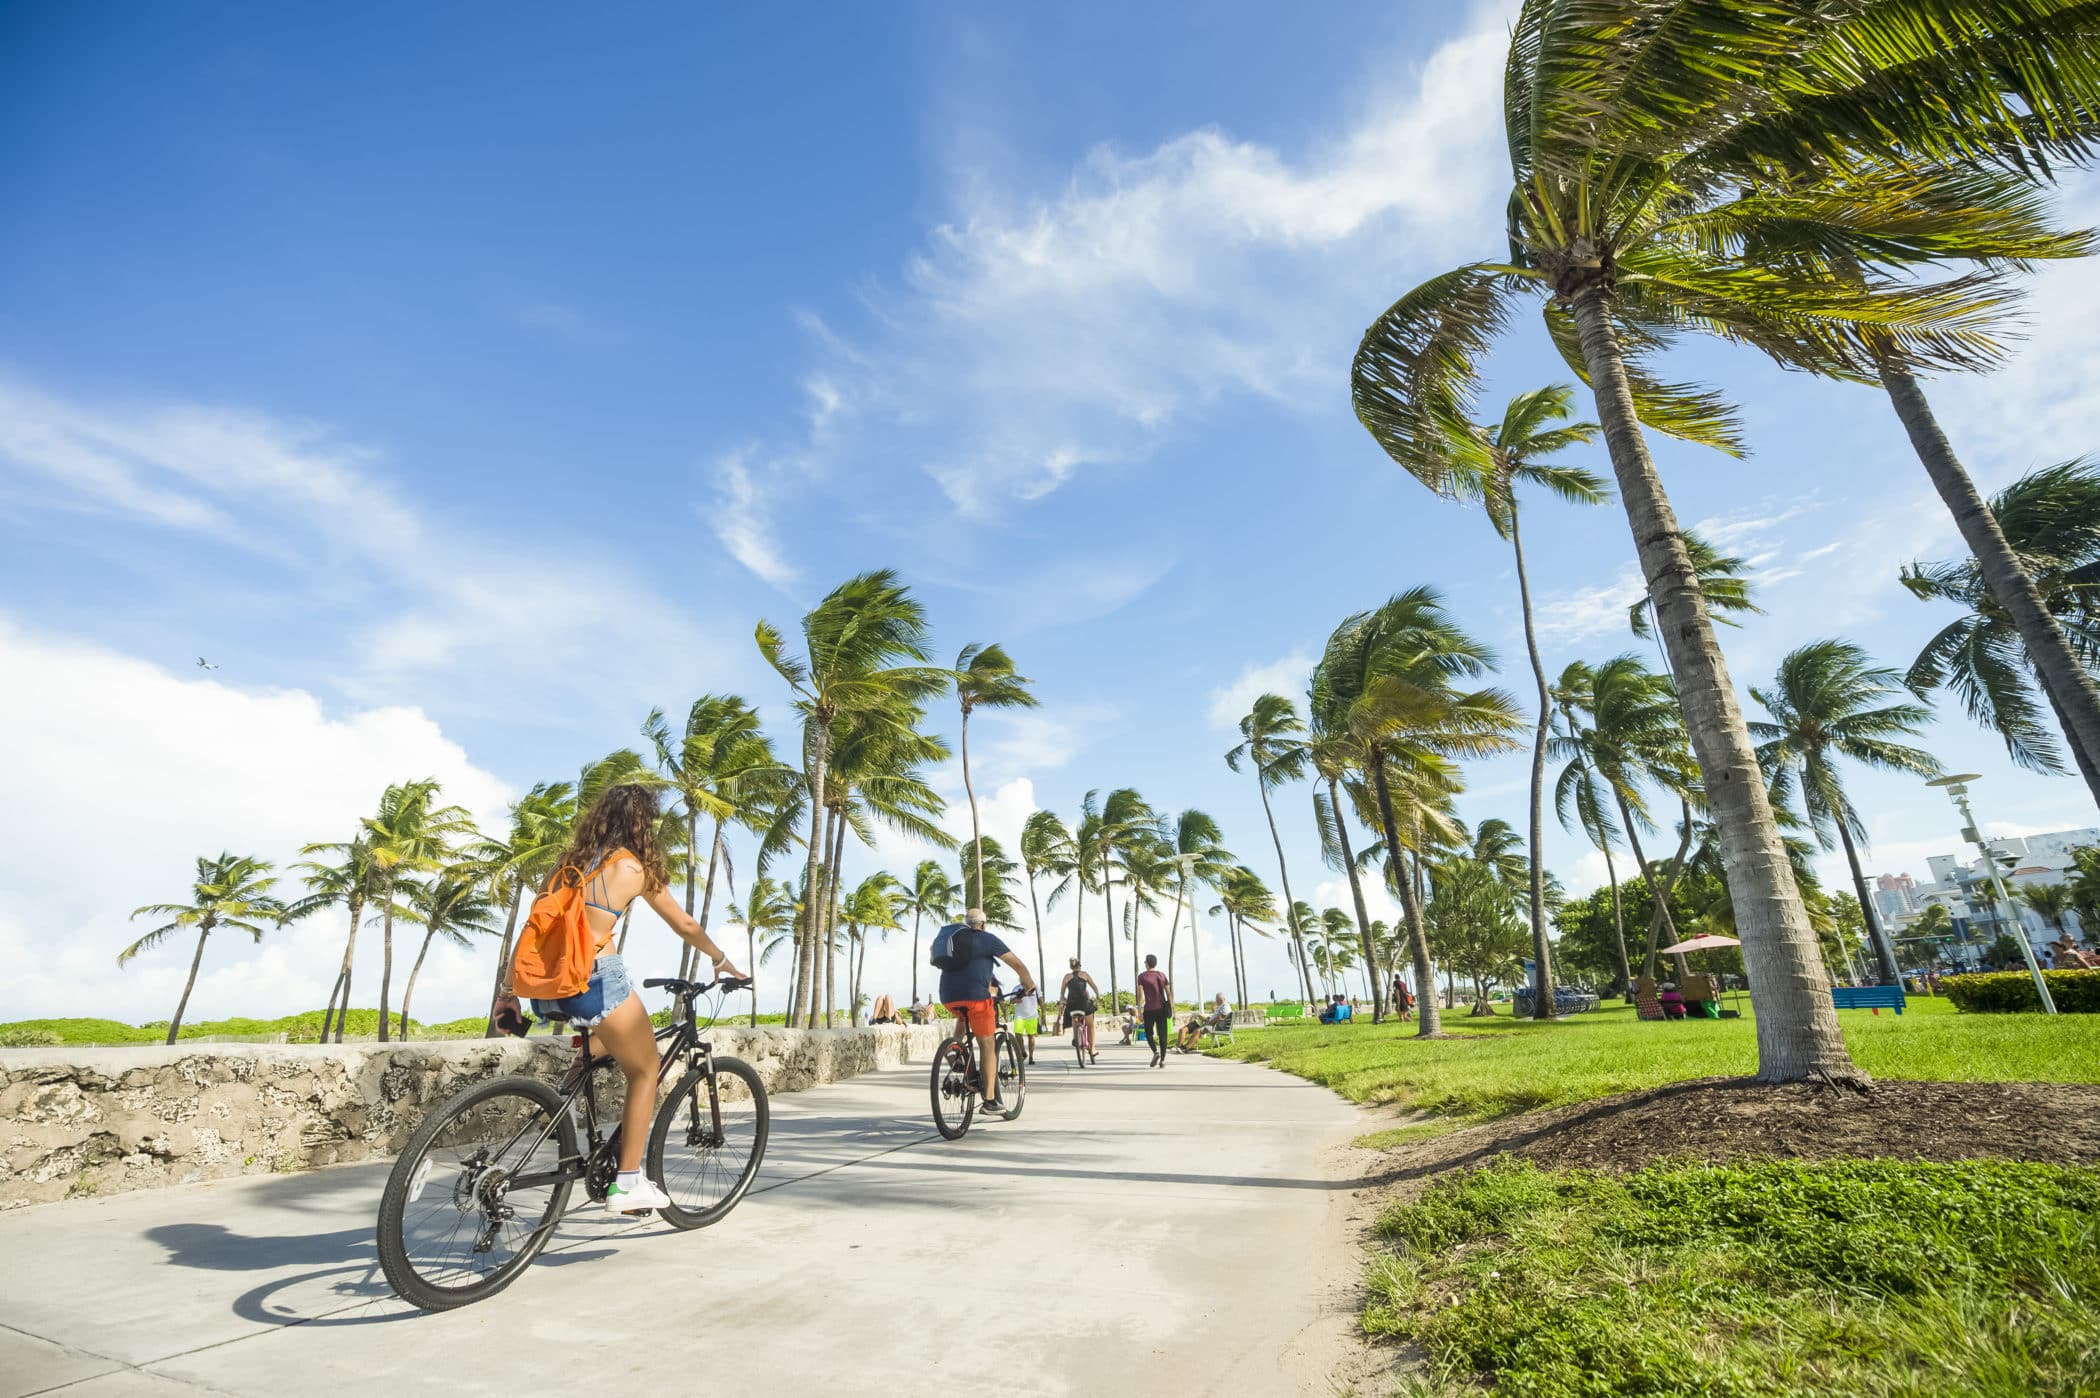 Bright scenic morning view of the beachfront promenade in Lummus Park adjacent to historic Ocean Drive in South Beach, Miami, Florida